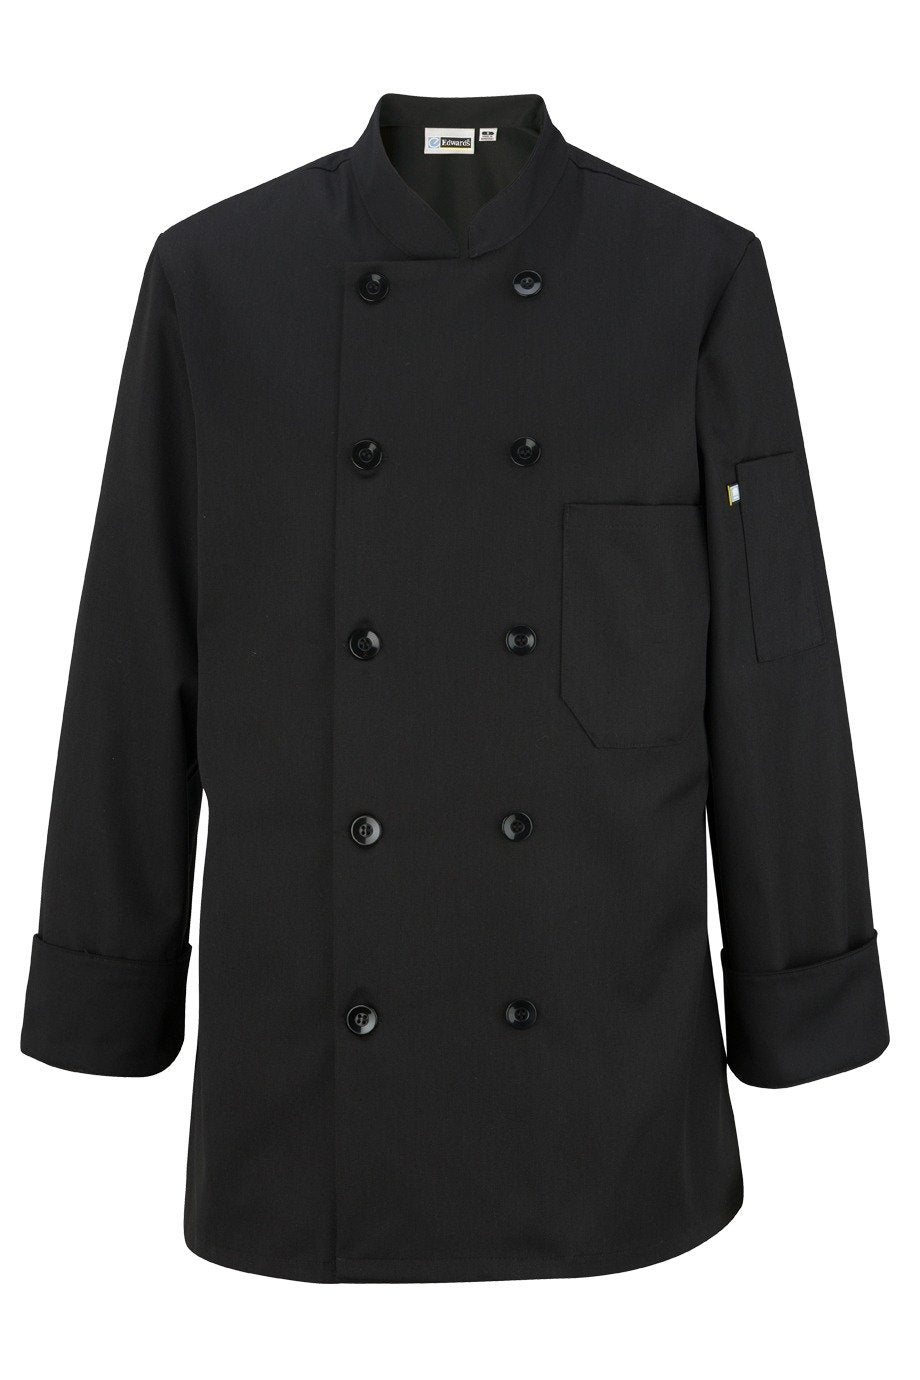 edwards-garment-chef-coats-and-server-jackets